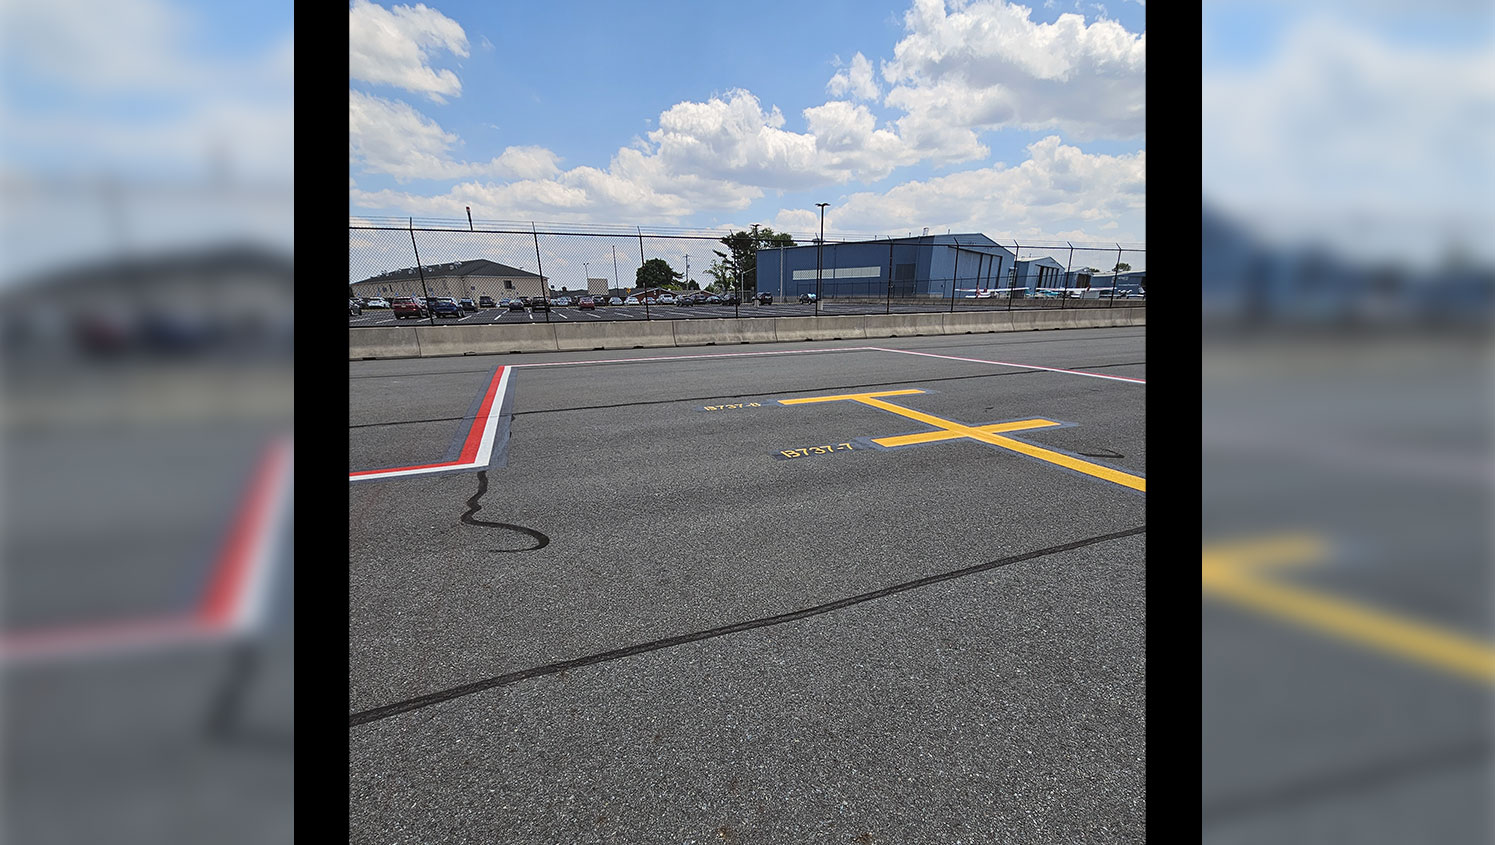 airport runway markings at wilmington airport